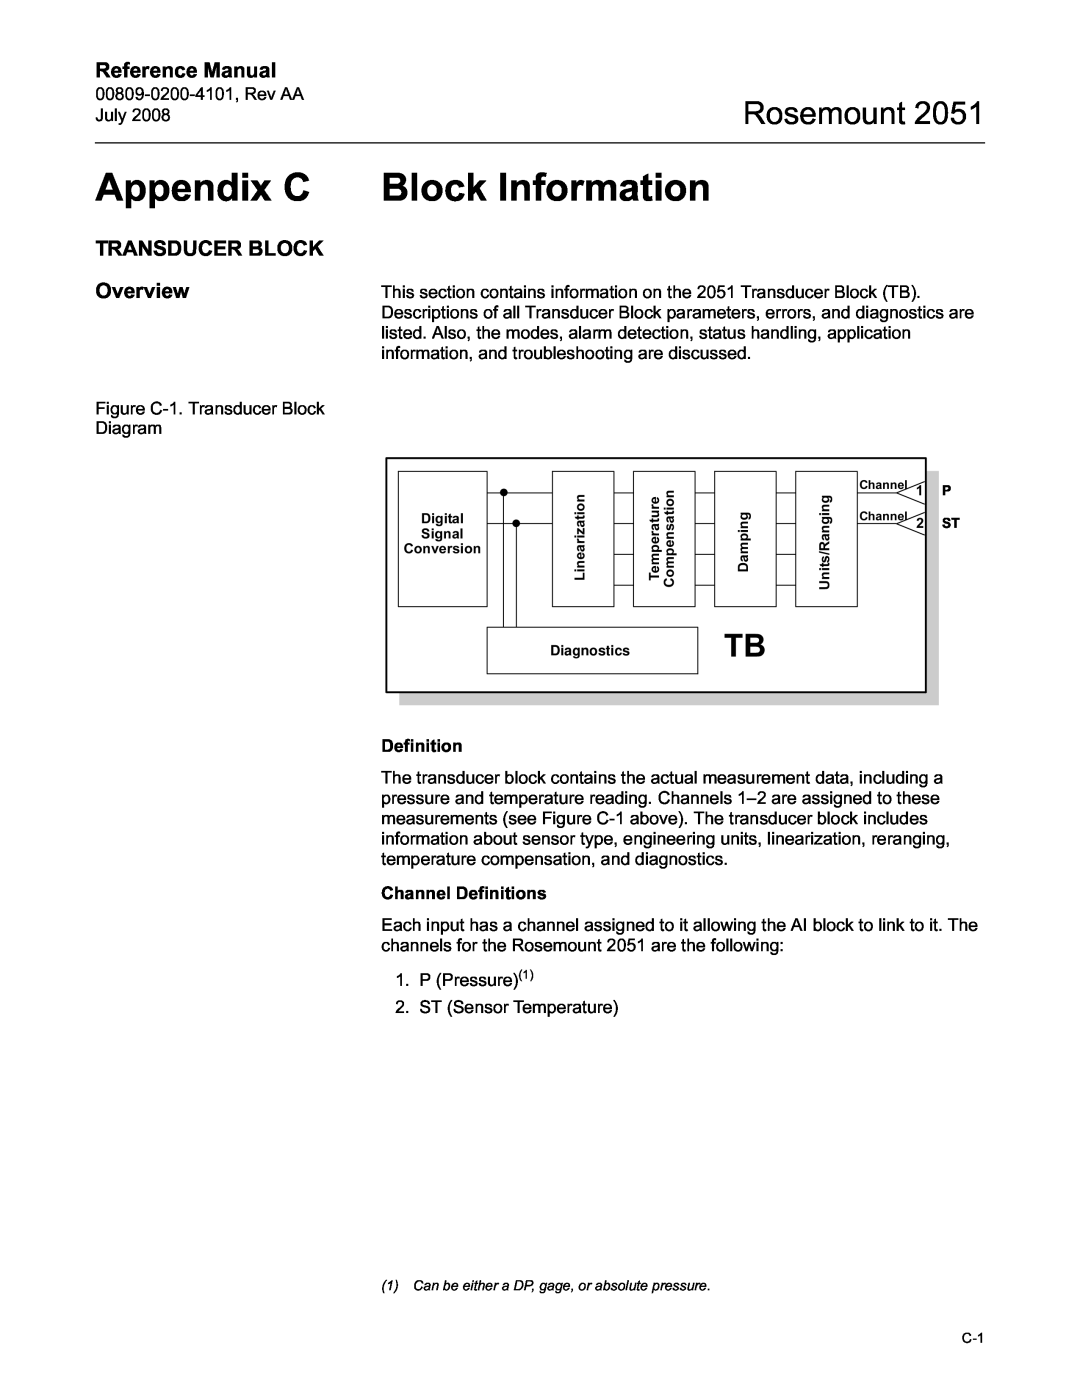 Emerson Process Management 2051 Appendix C, Block Information, TRANSDUCER BLOCK Overview, Rosemount, Reference Manual 